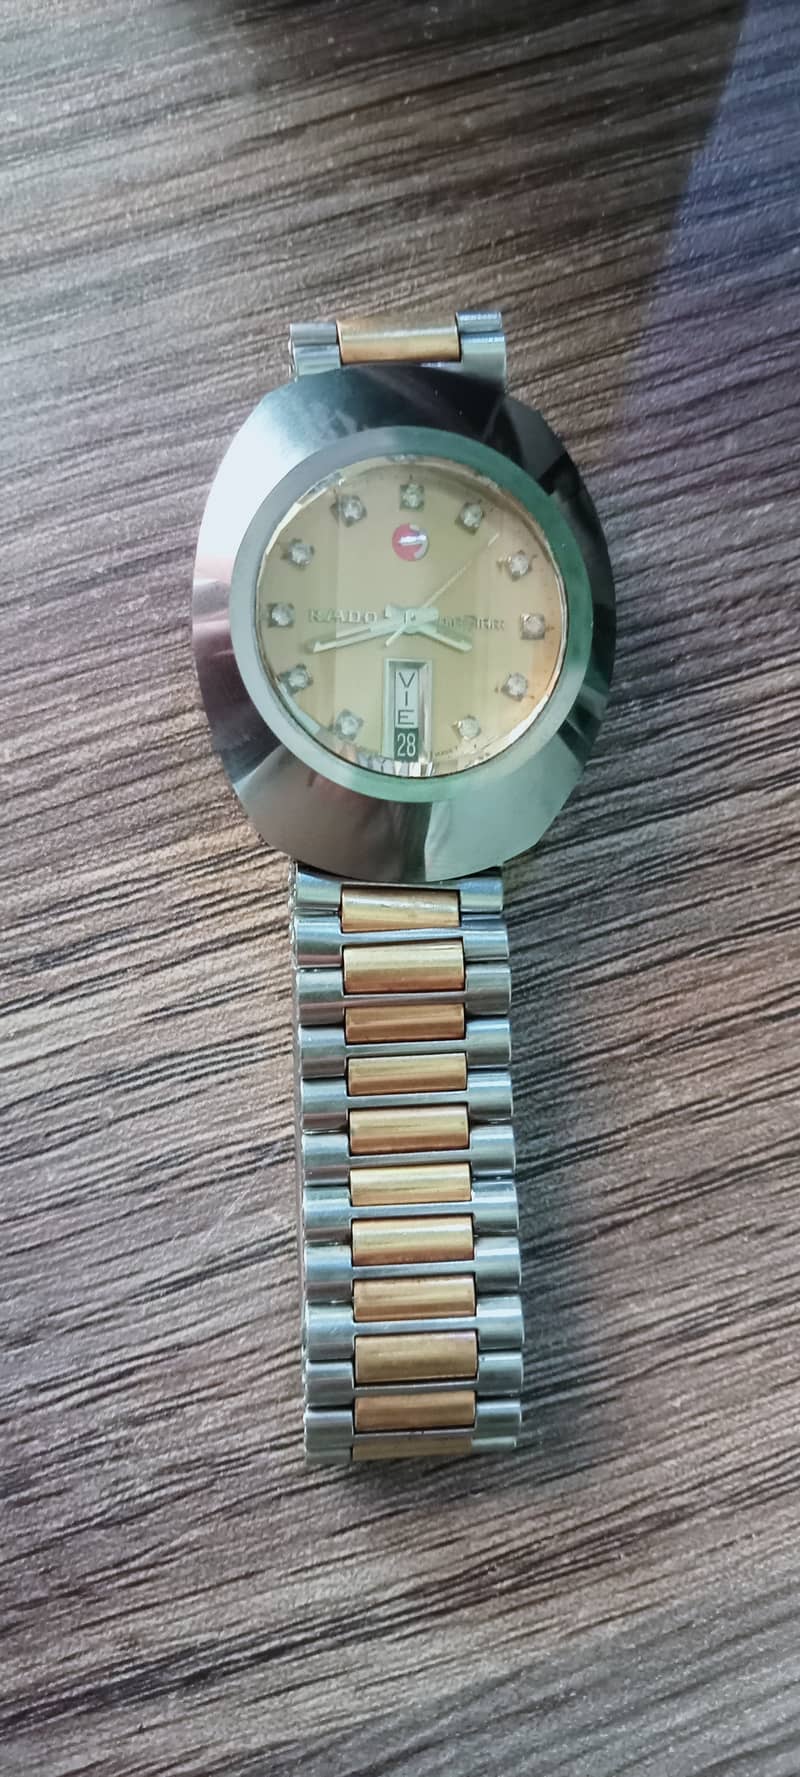 Original RADO DiaStar Watch - Purchased from Saudi Arabia 4